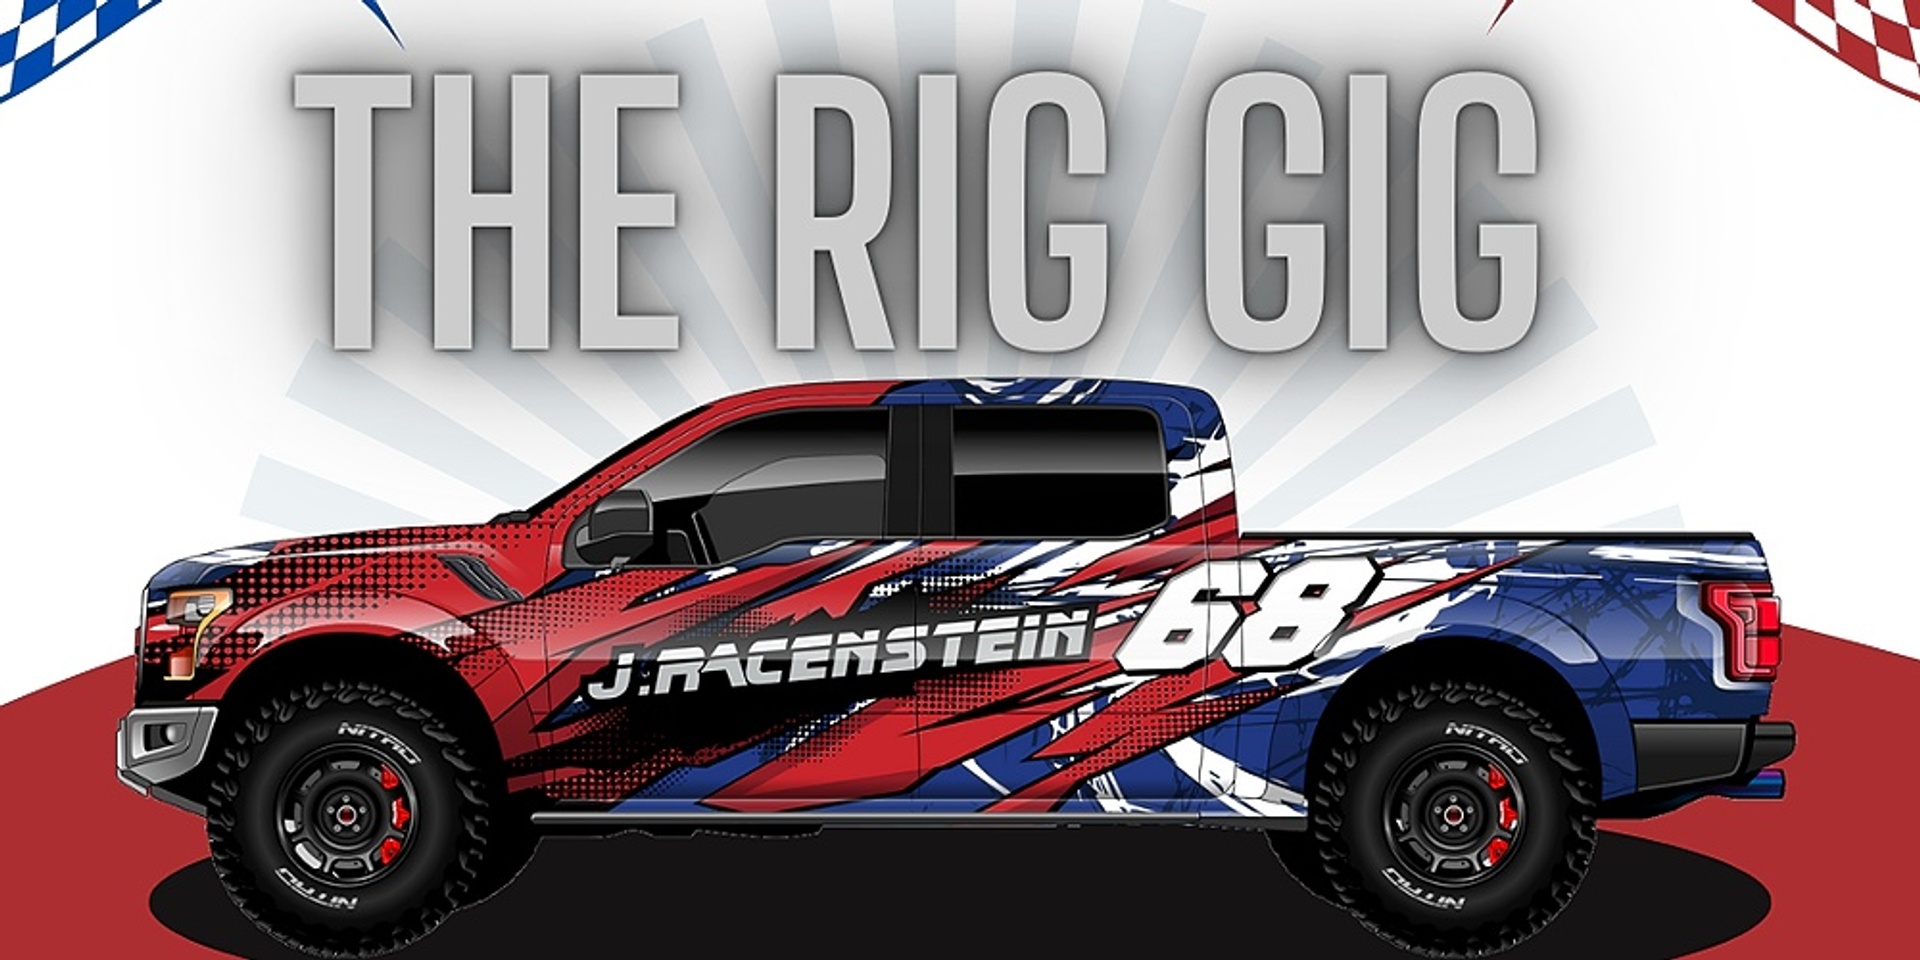 RIG GIG 2 by J Racenstein - California